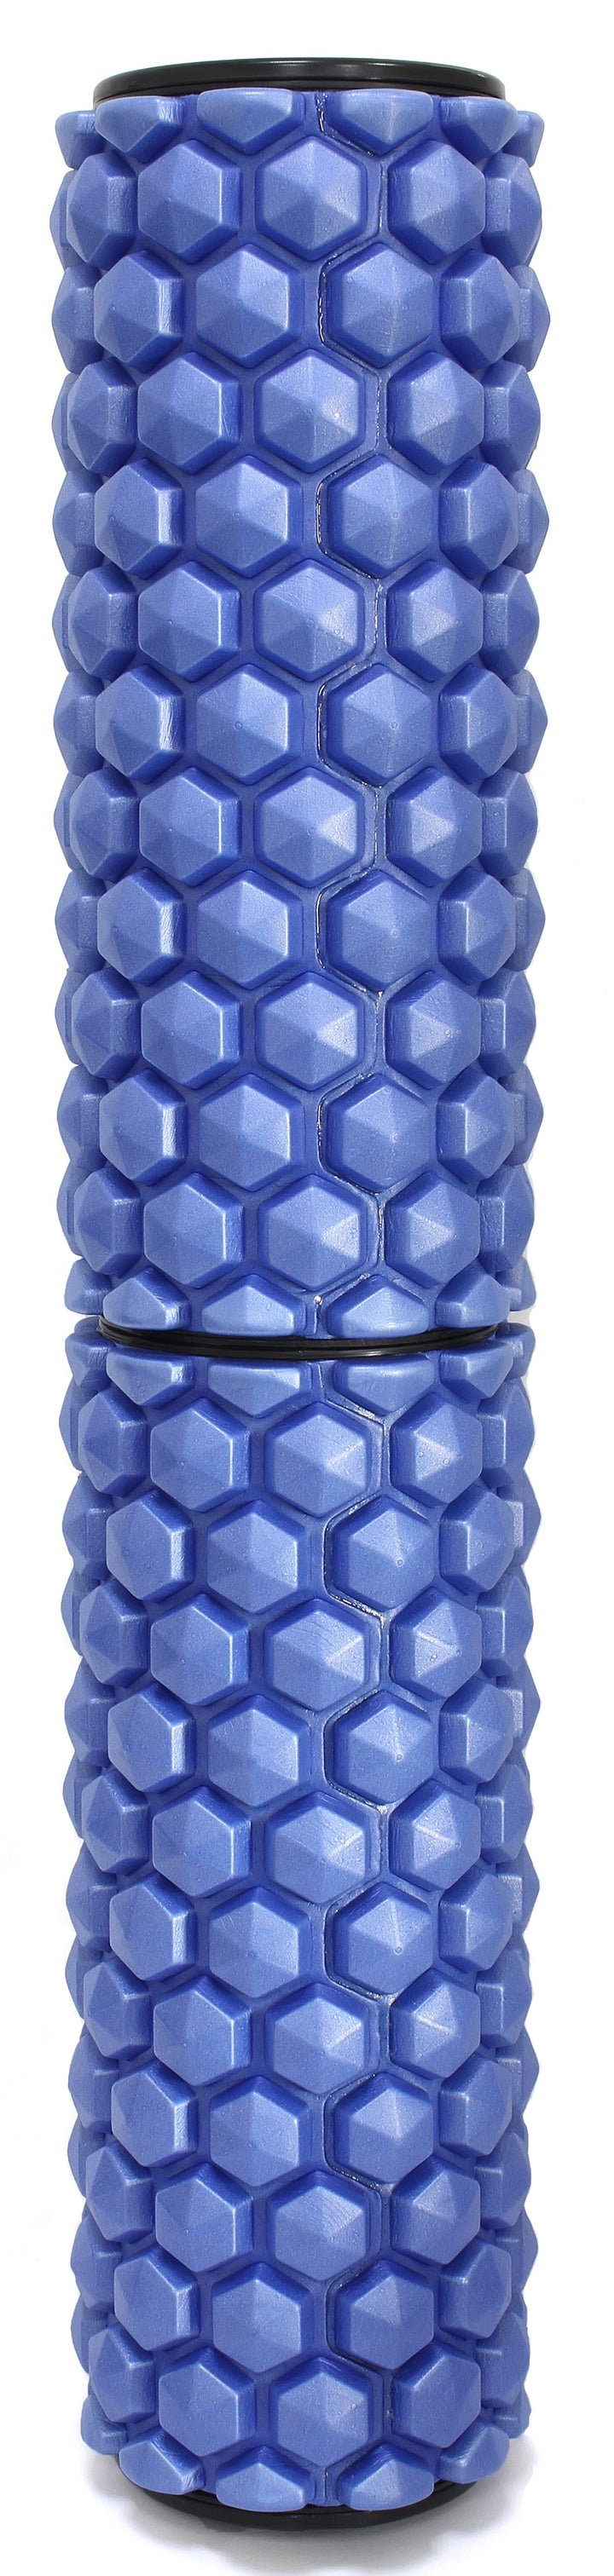 Foam Yoga Roller - Hexagon